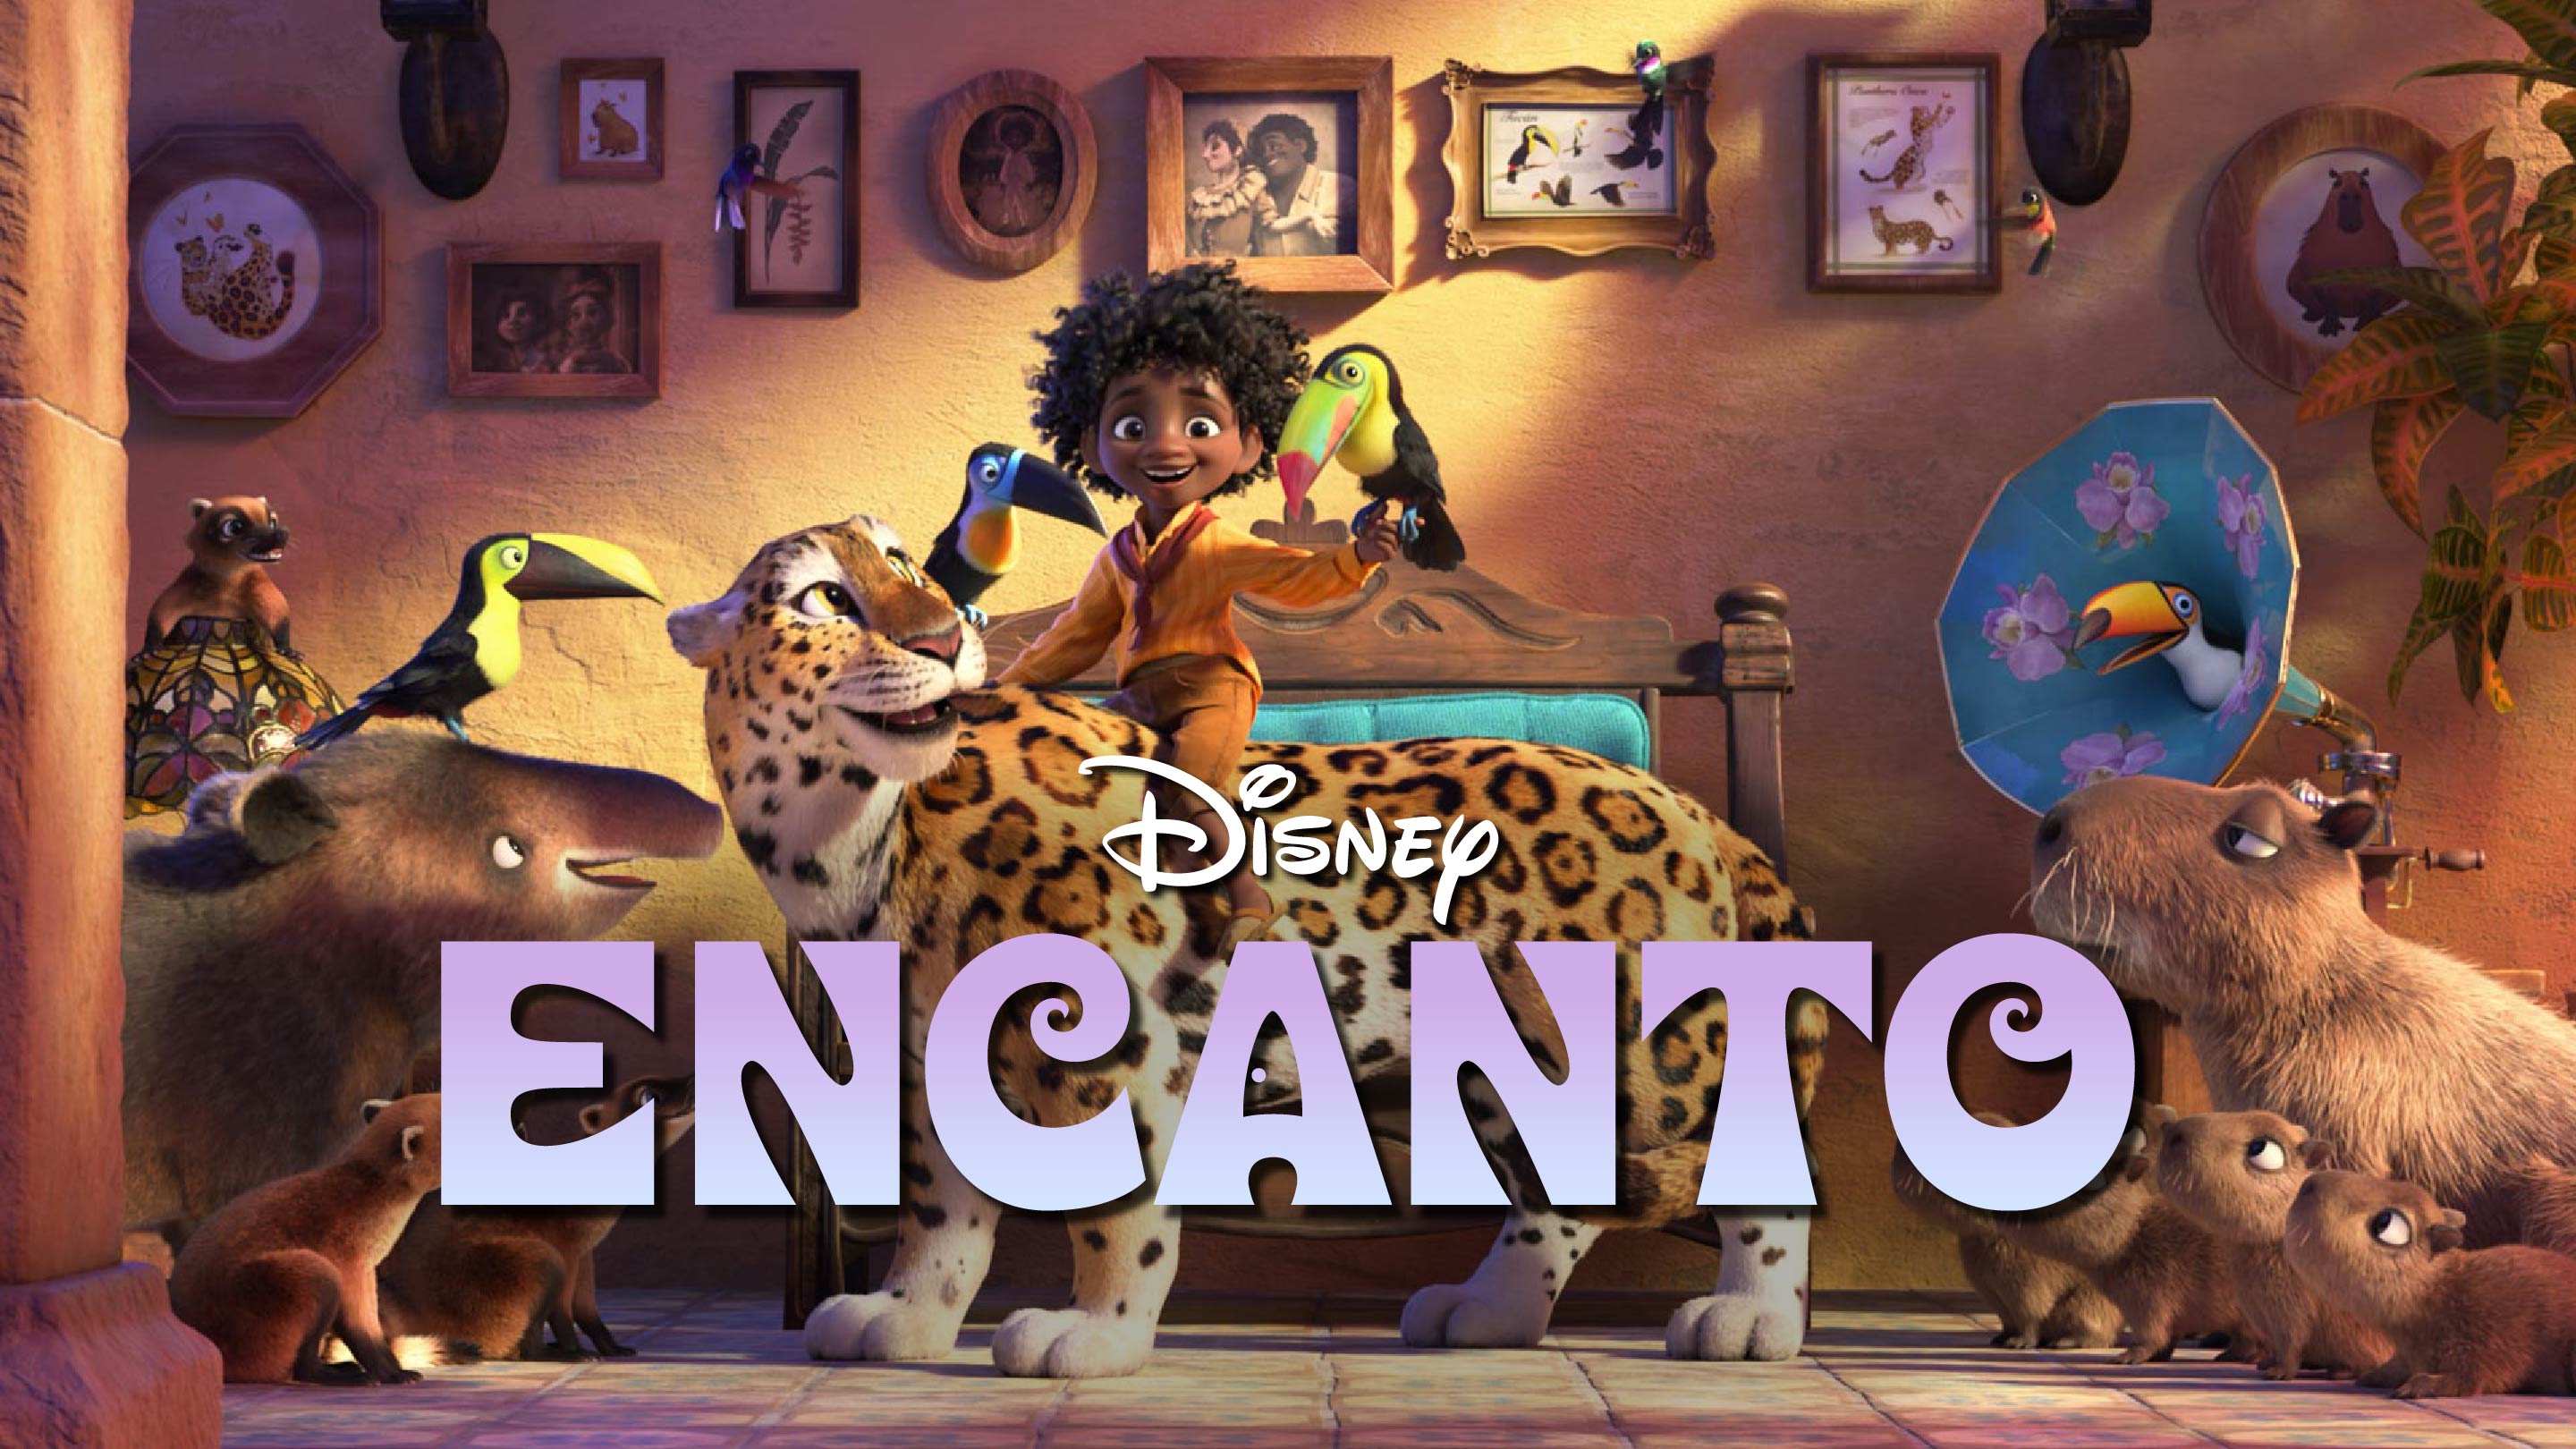 Disney Encanto Logo Title Treatment Explorations by Hoodzpah